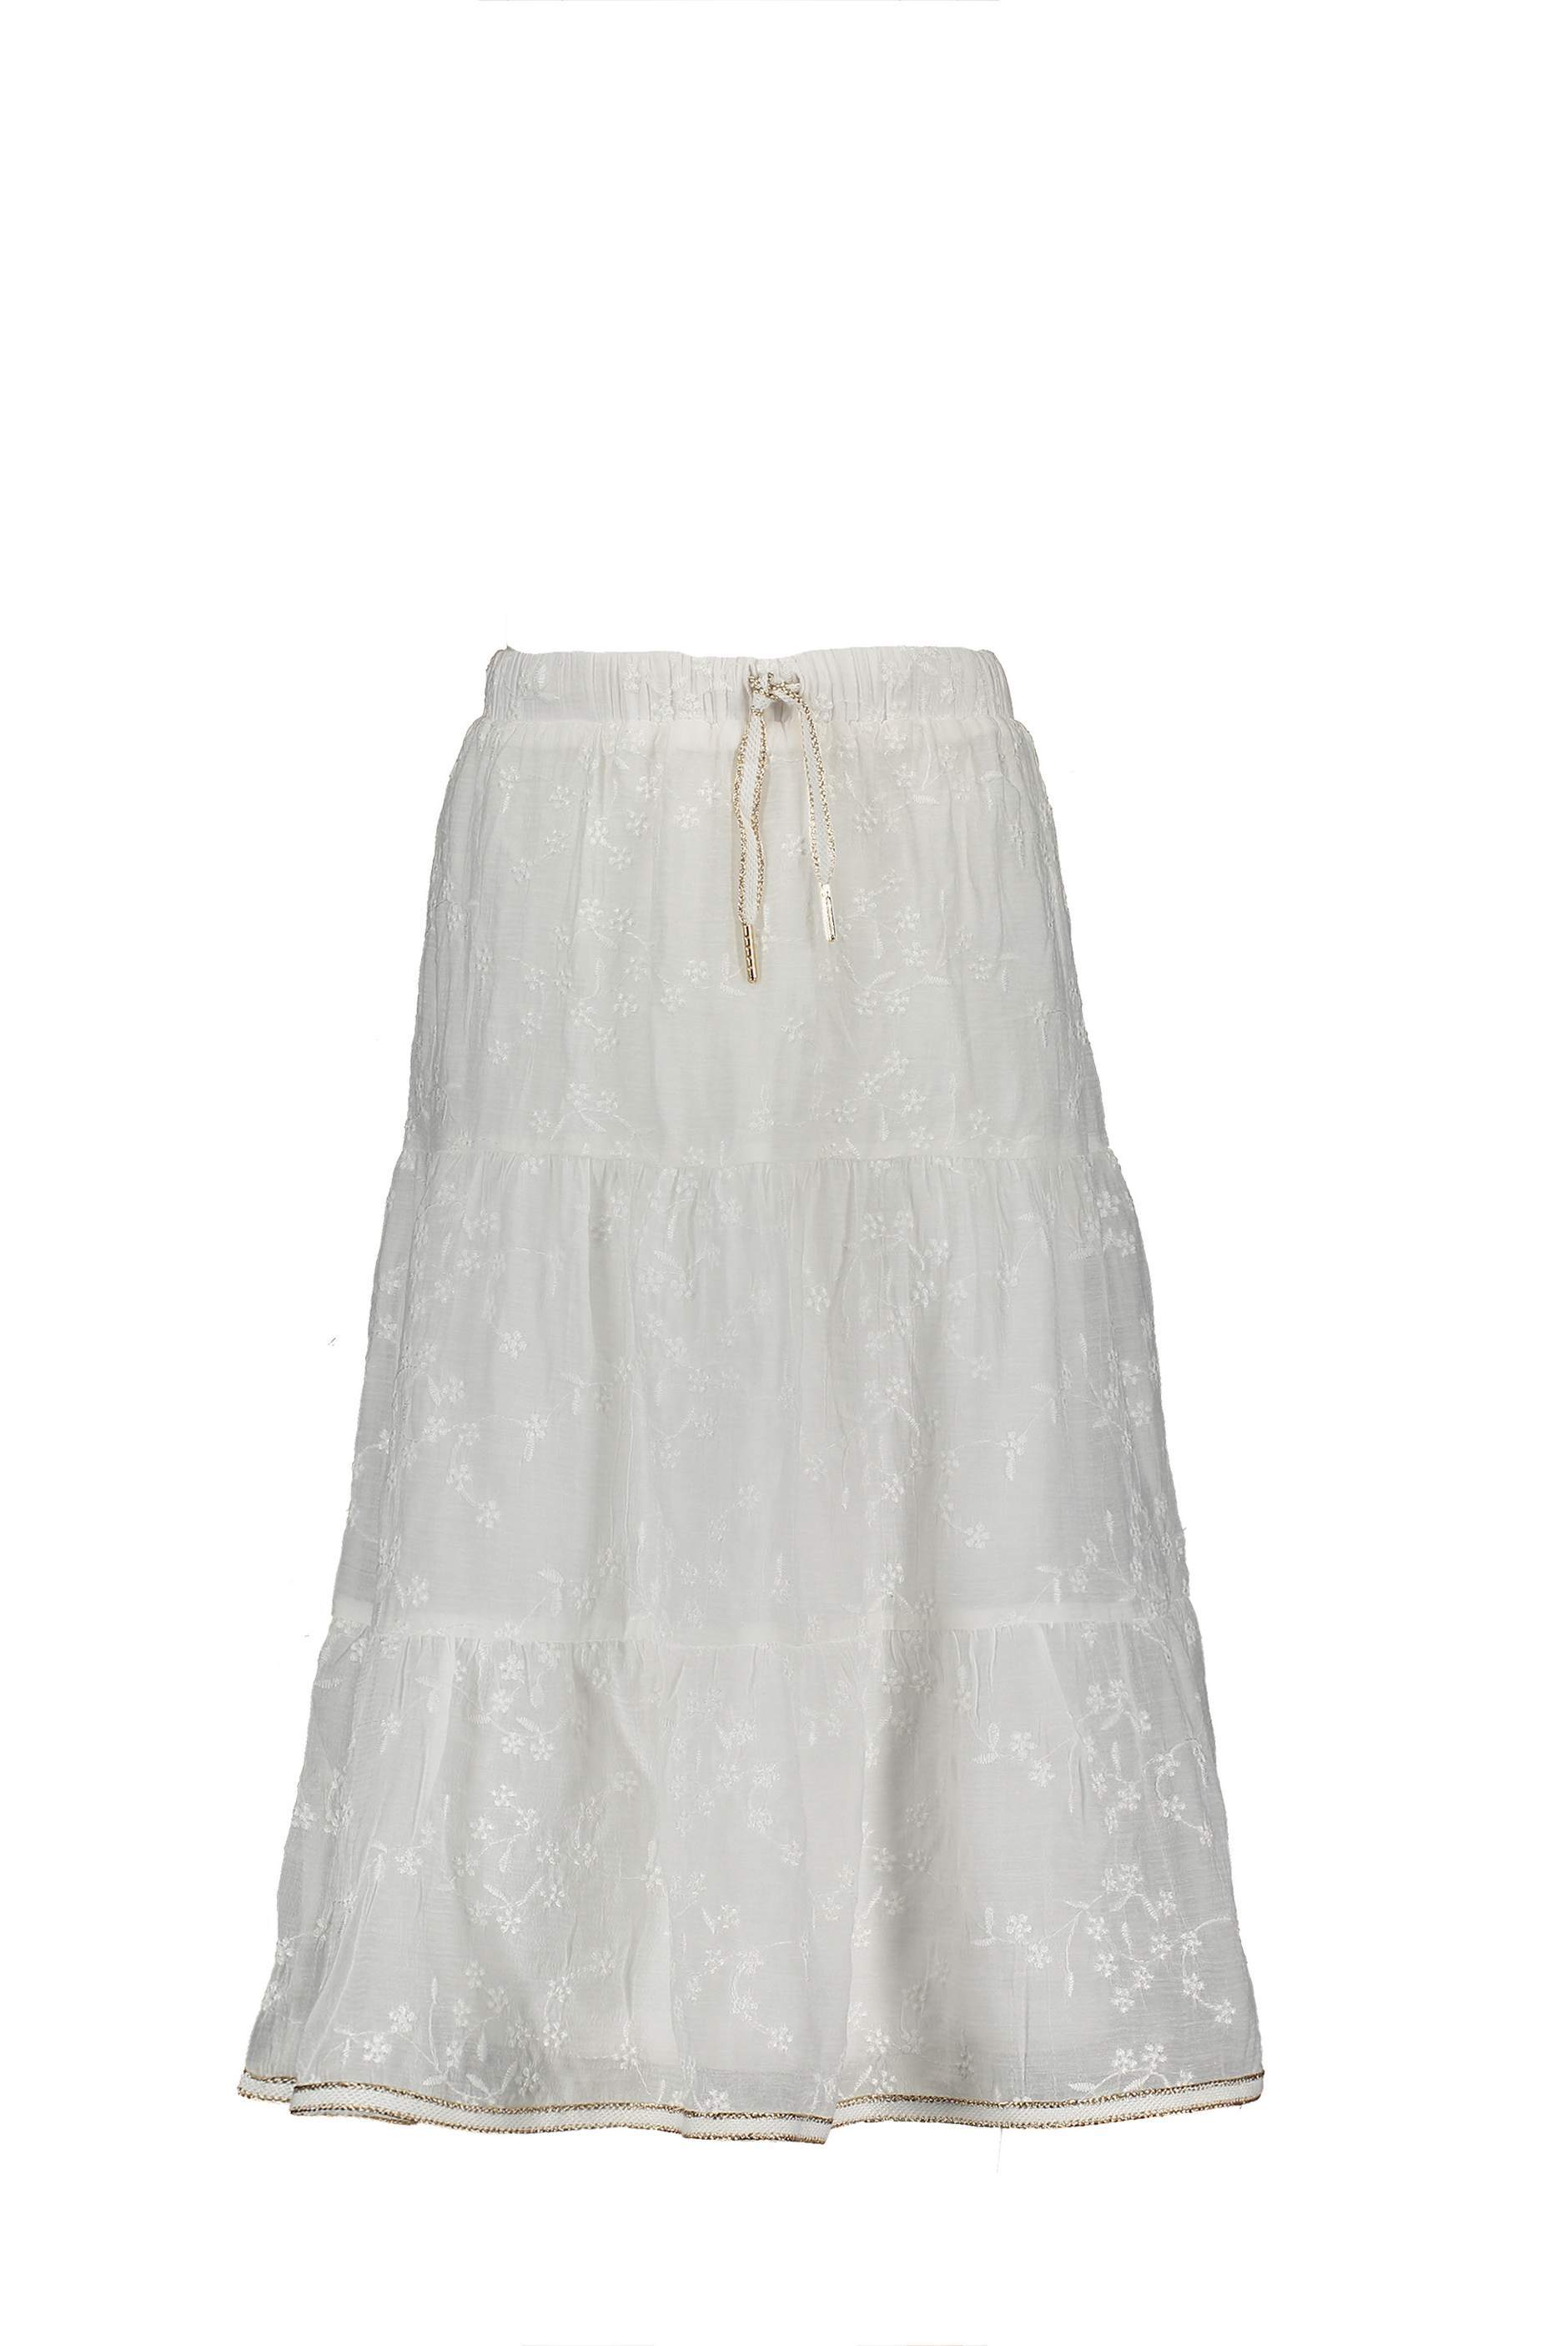 Meisjes Nael maxi skirt Embroidered cotton van NoNo in de kleur Snow White in maat 146/152.